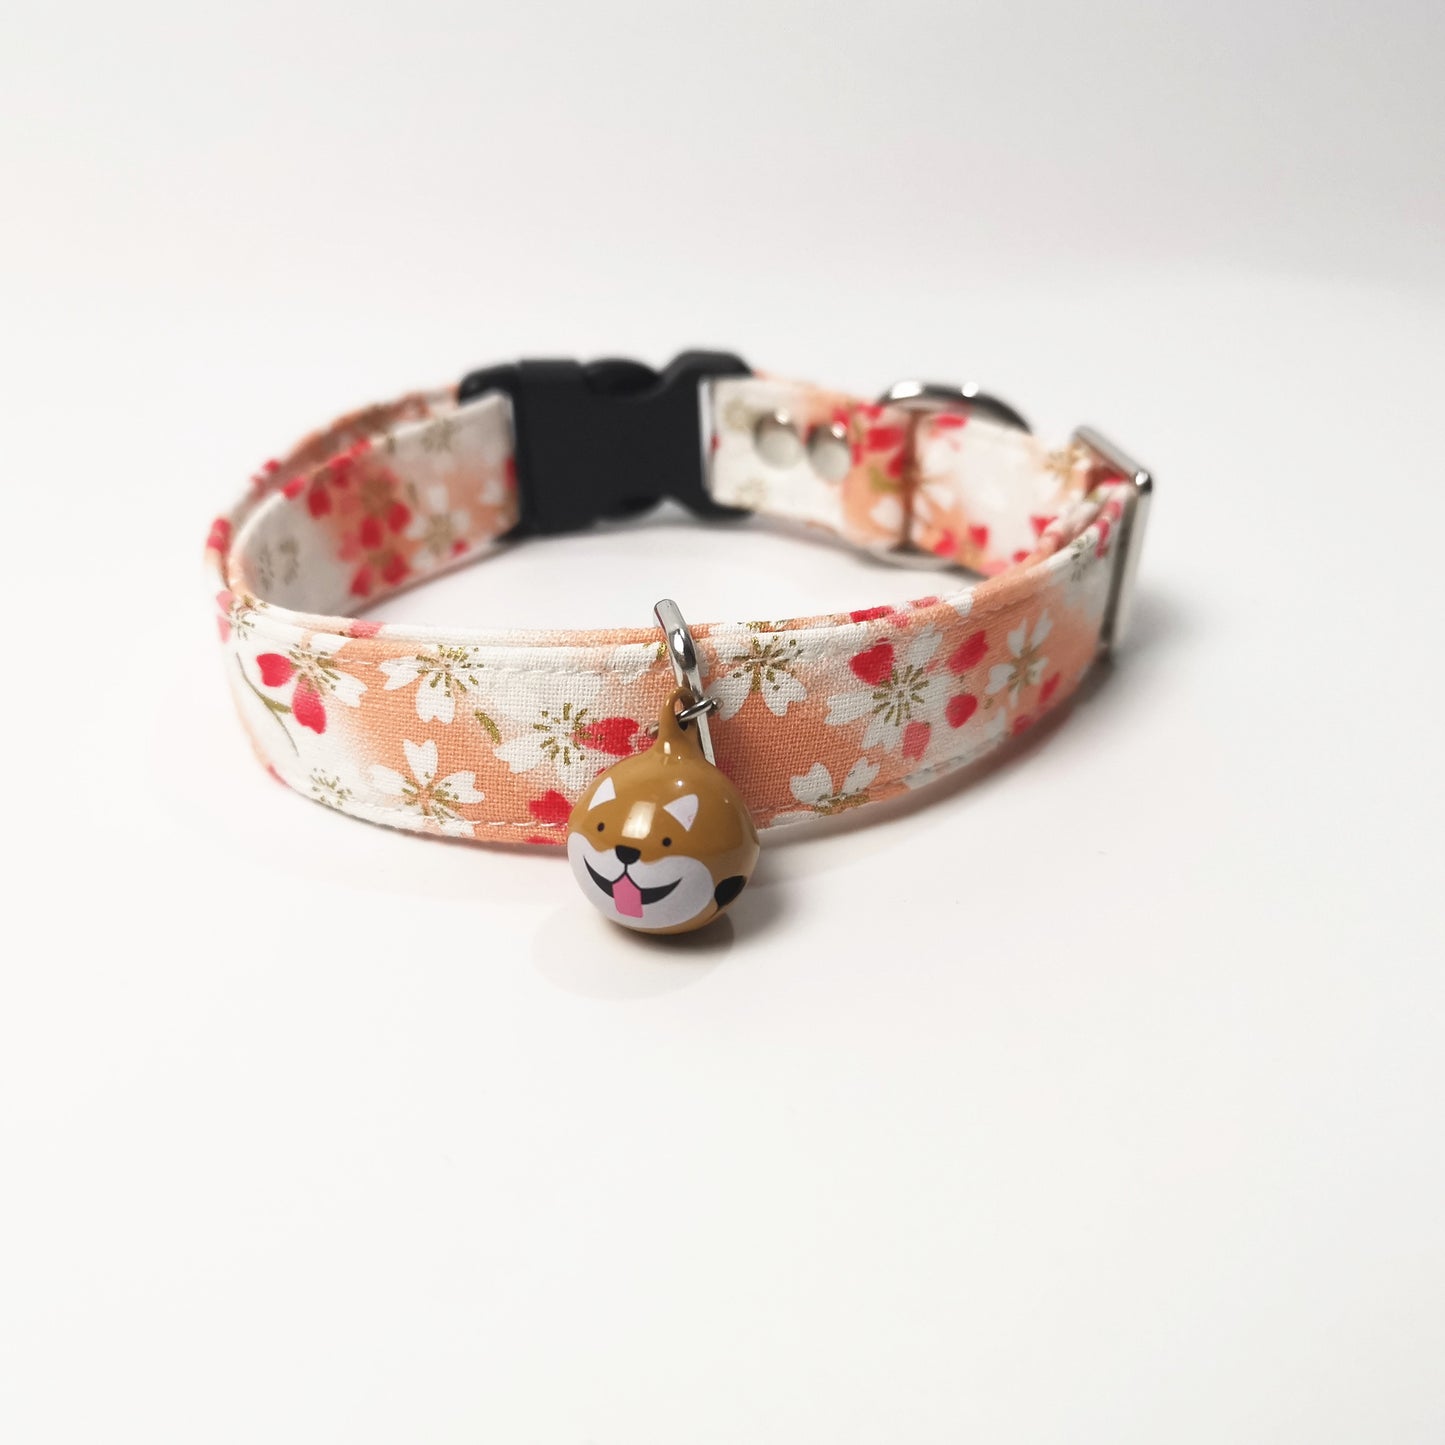 ShibaStyle - Dog Collar | Unique & Playful Shiba Inu Design with Optional Leash Set